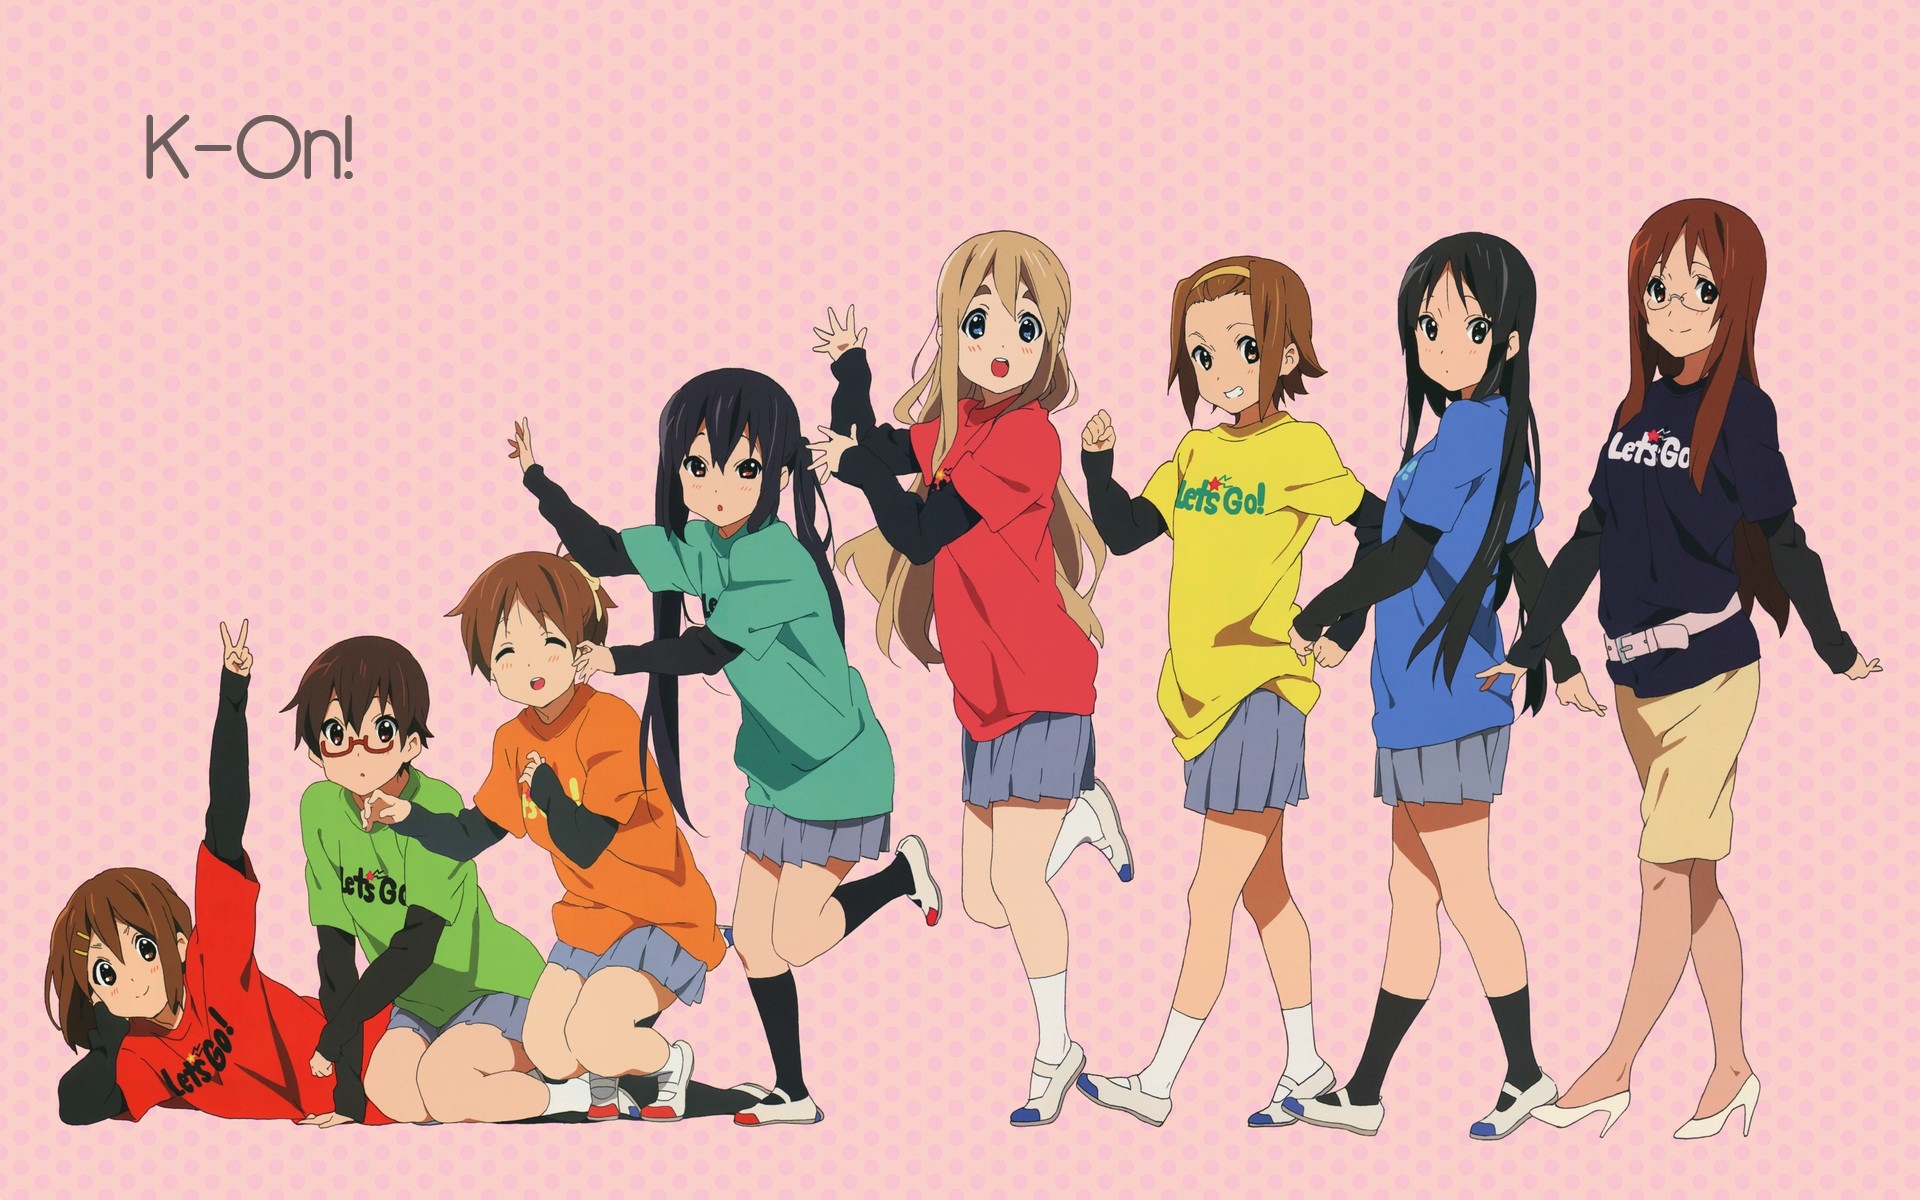 Anime 1920x1200 Hirasawa Ui anime girls anime K-ON! group of women simple background looking at viewer brunette dark hair